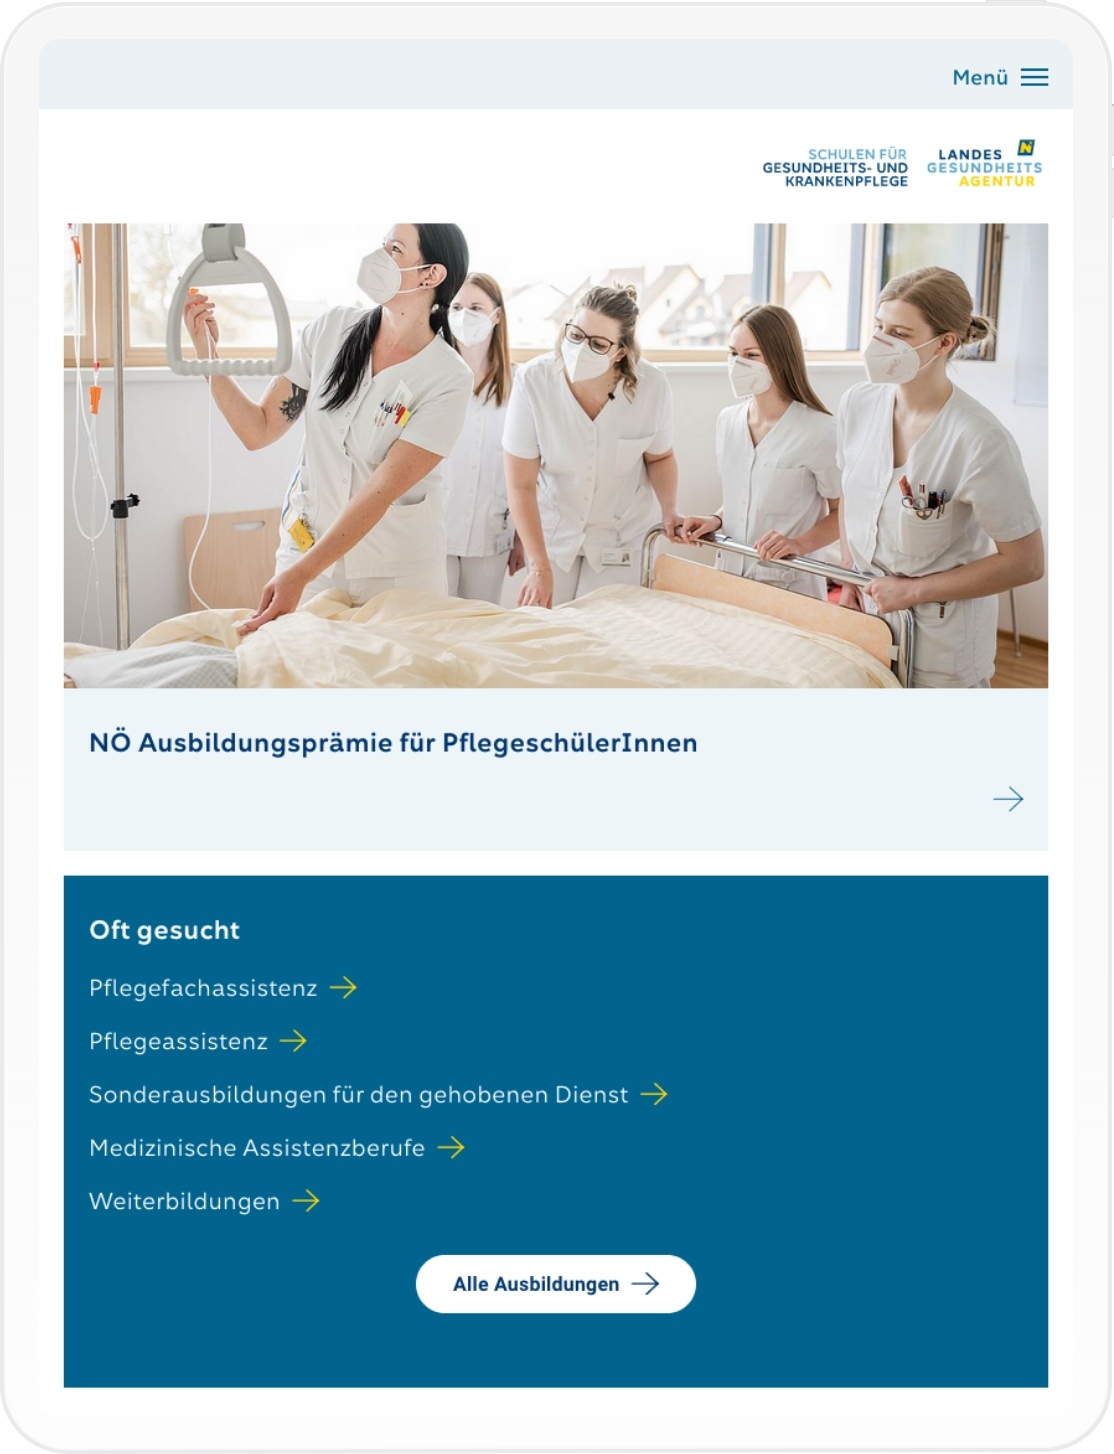 Pflegeschulen Viewport der NÖ LGA Website auf dem Tablet